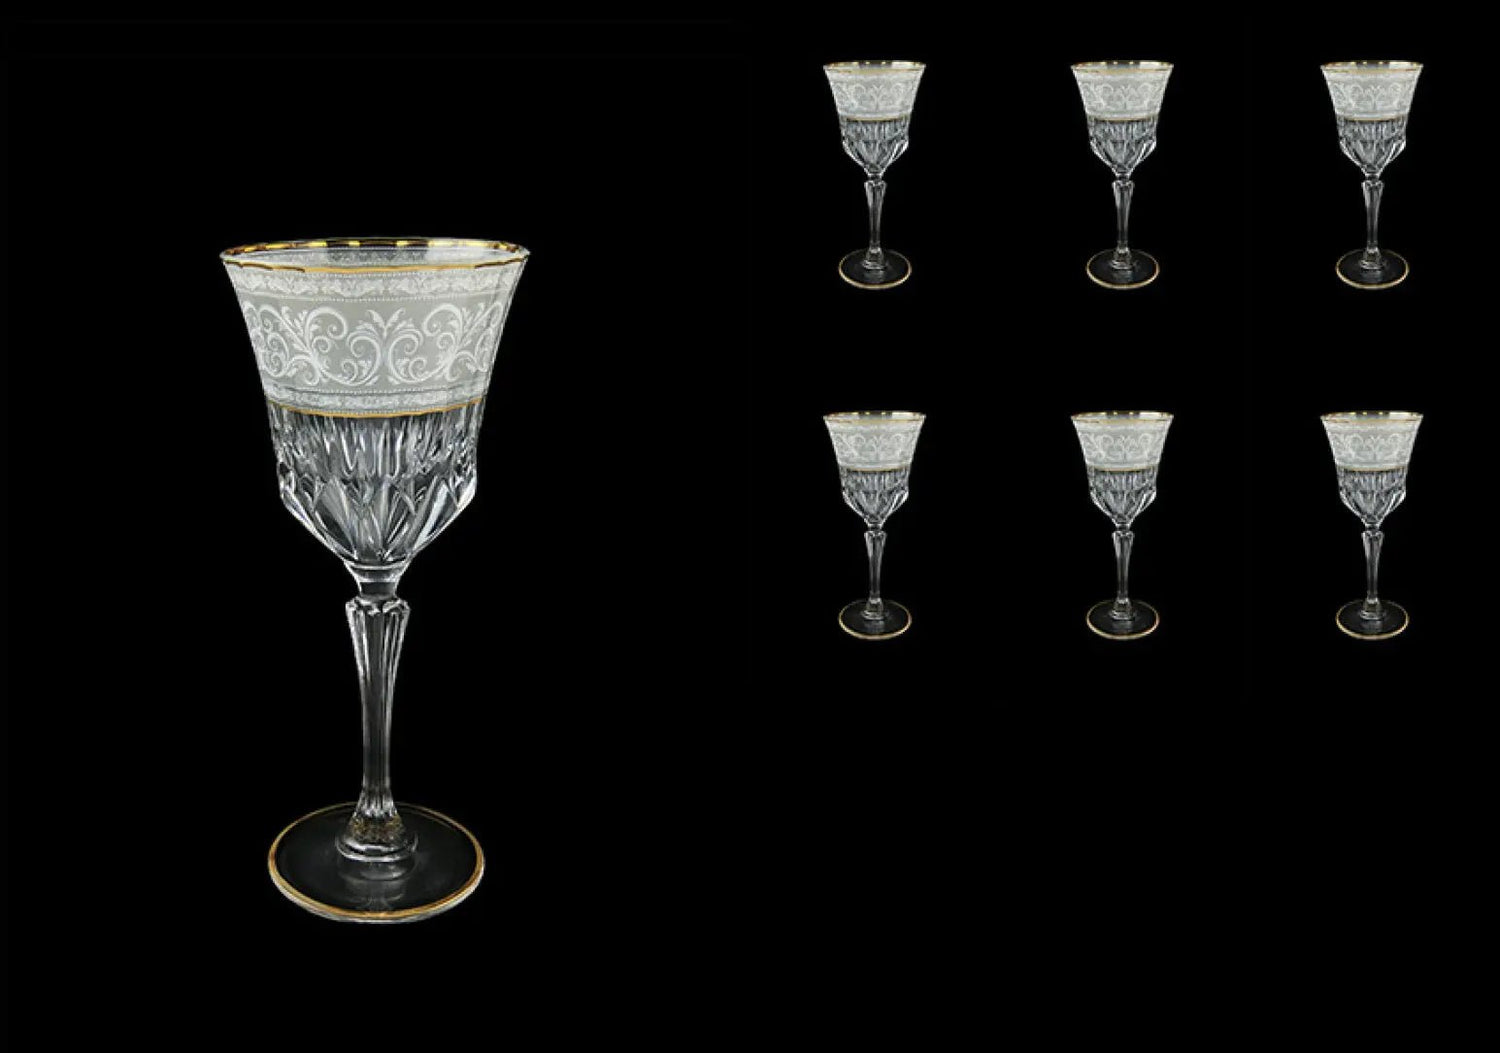 Wine Glasses 280ml, 6pcs, "Adagio Allegro" in White&Grey Light by Astra Gold.